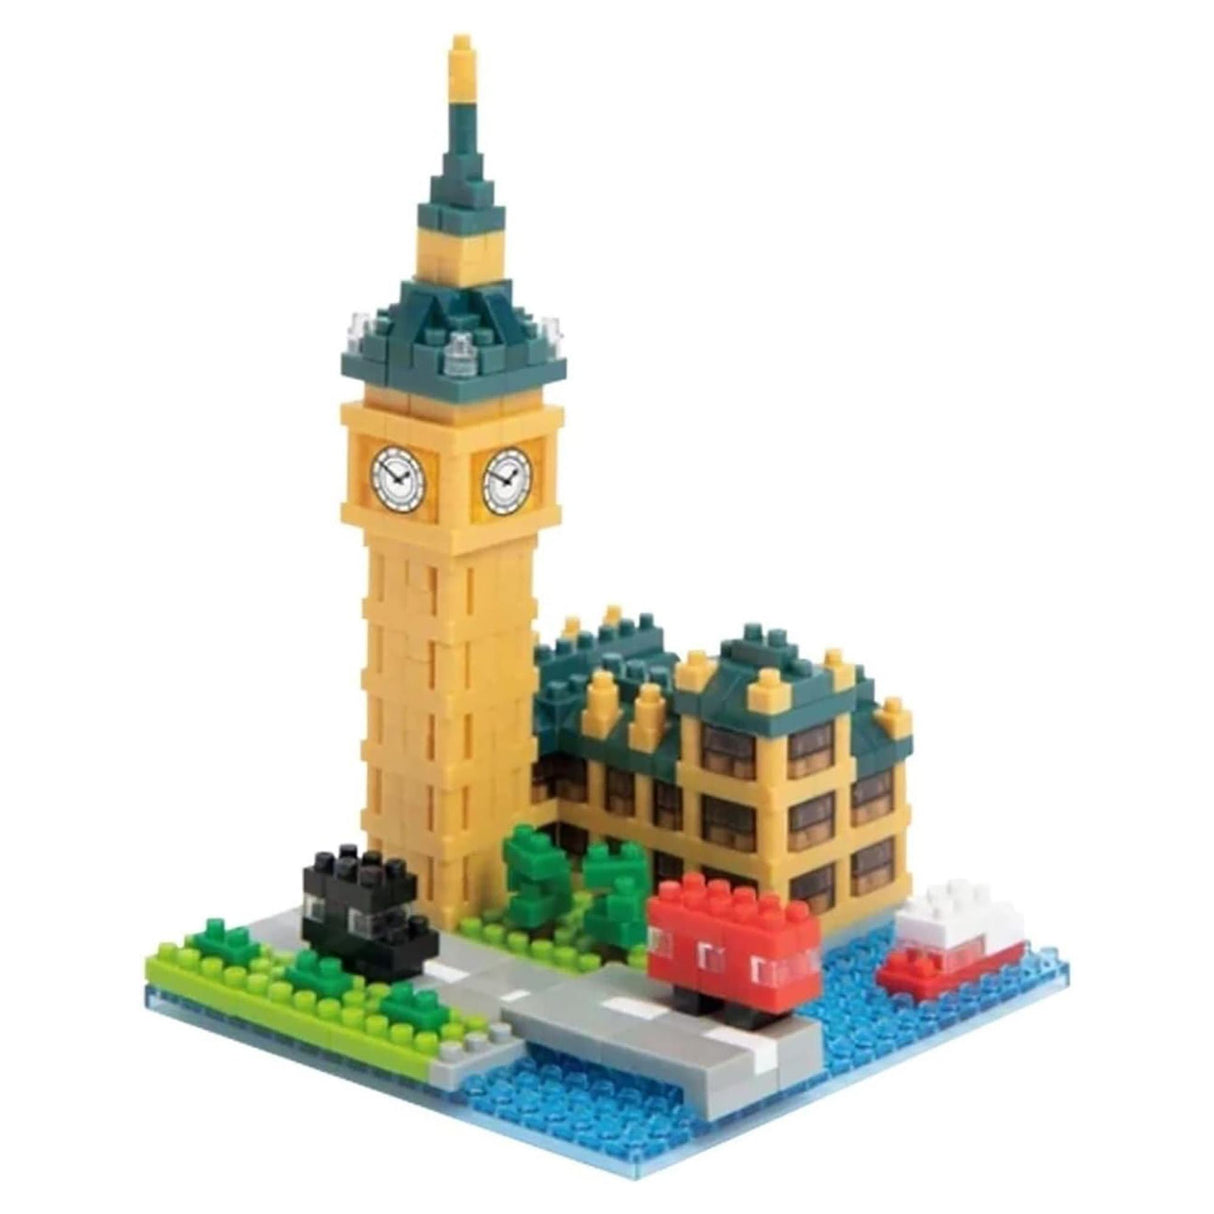 nanoblock Big Ben (460 pieces)